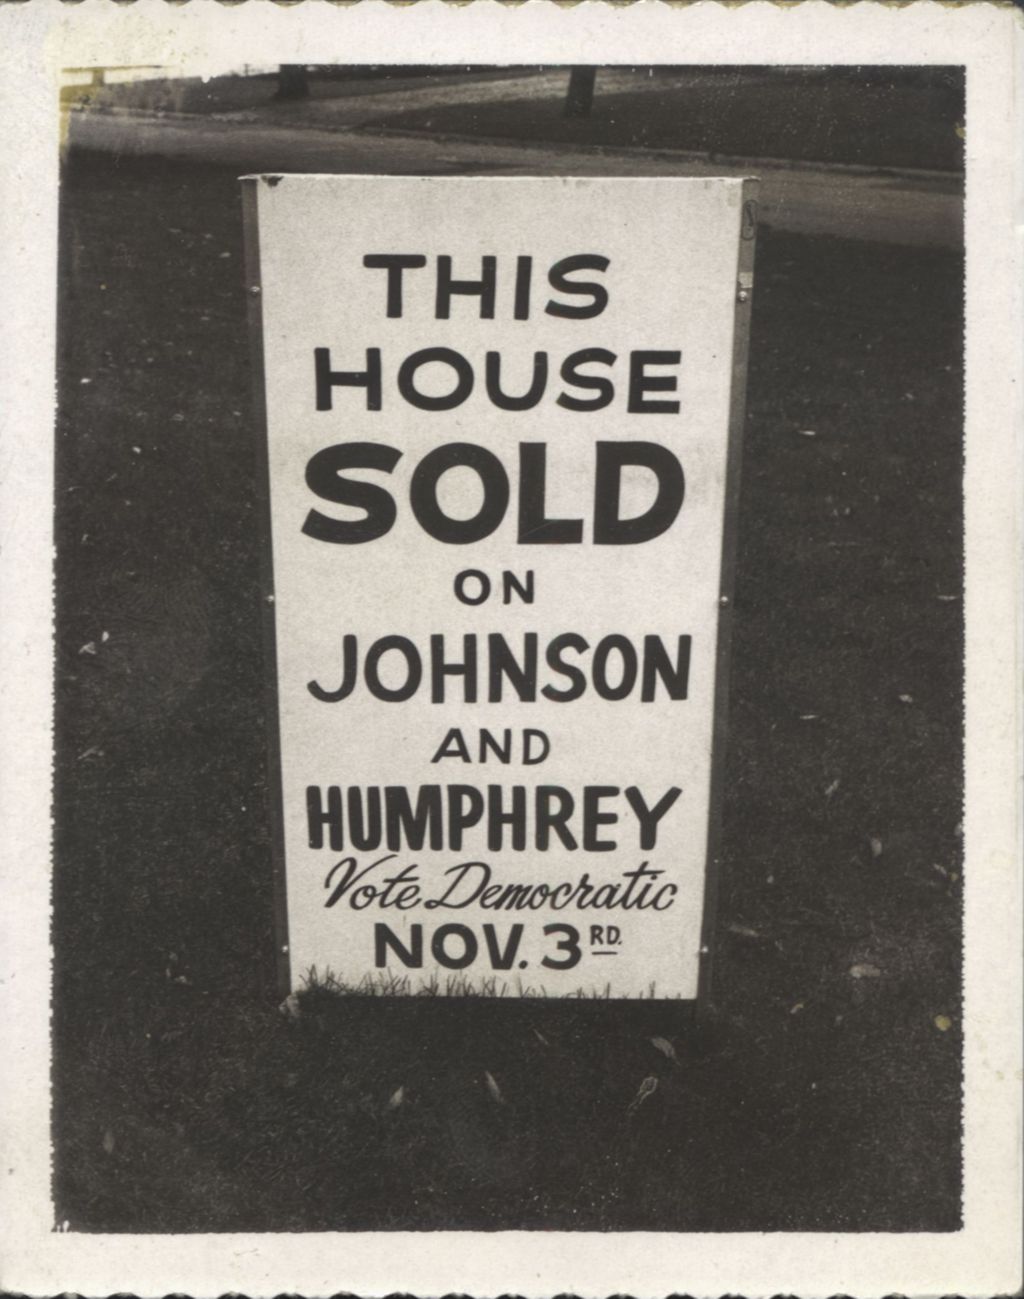 Miniature of Johnson - Humphrey support sign